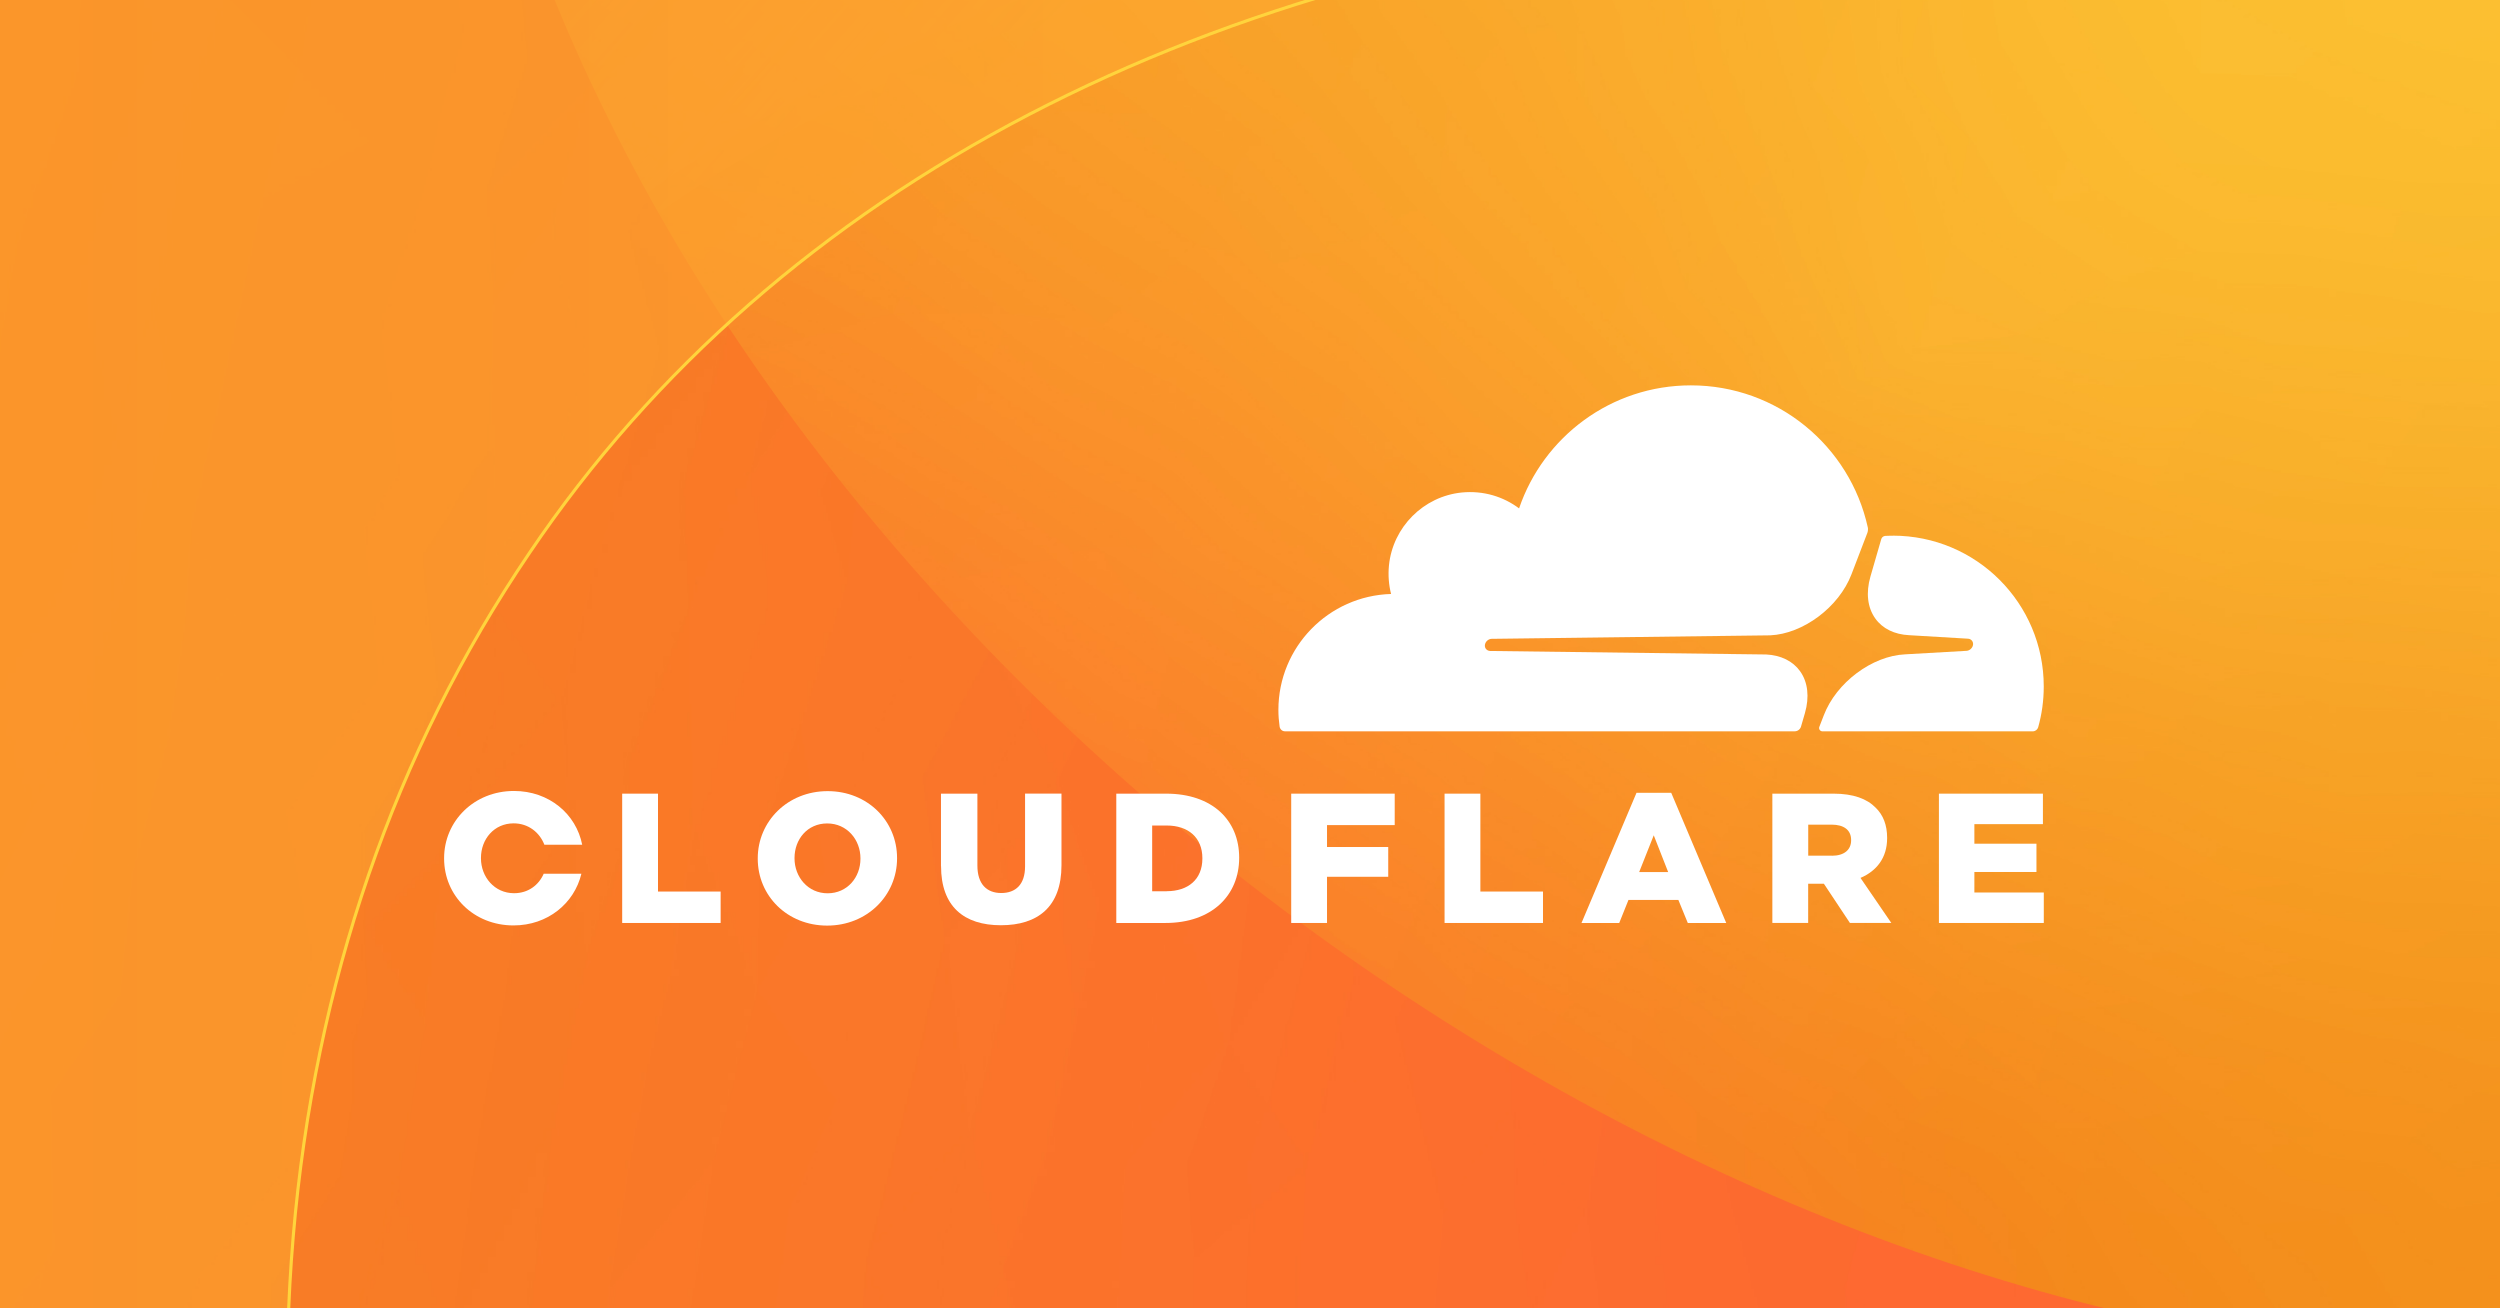 Cloudflare Company